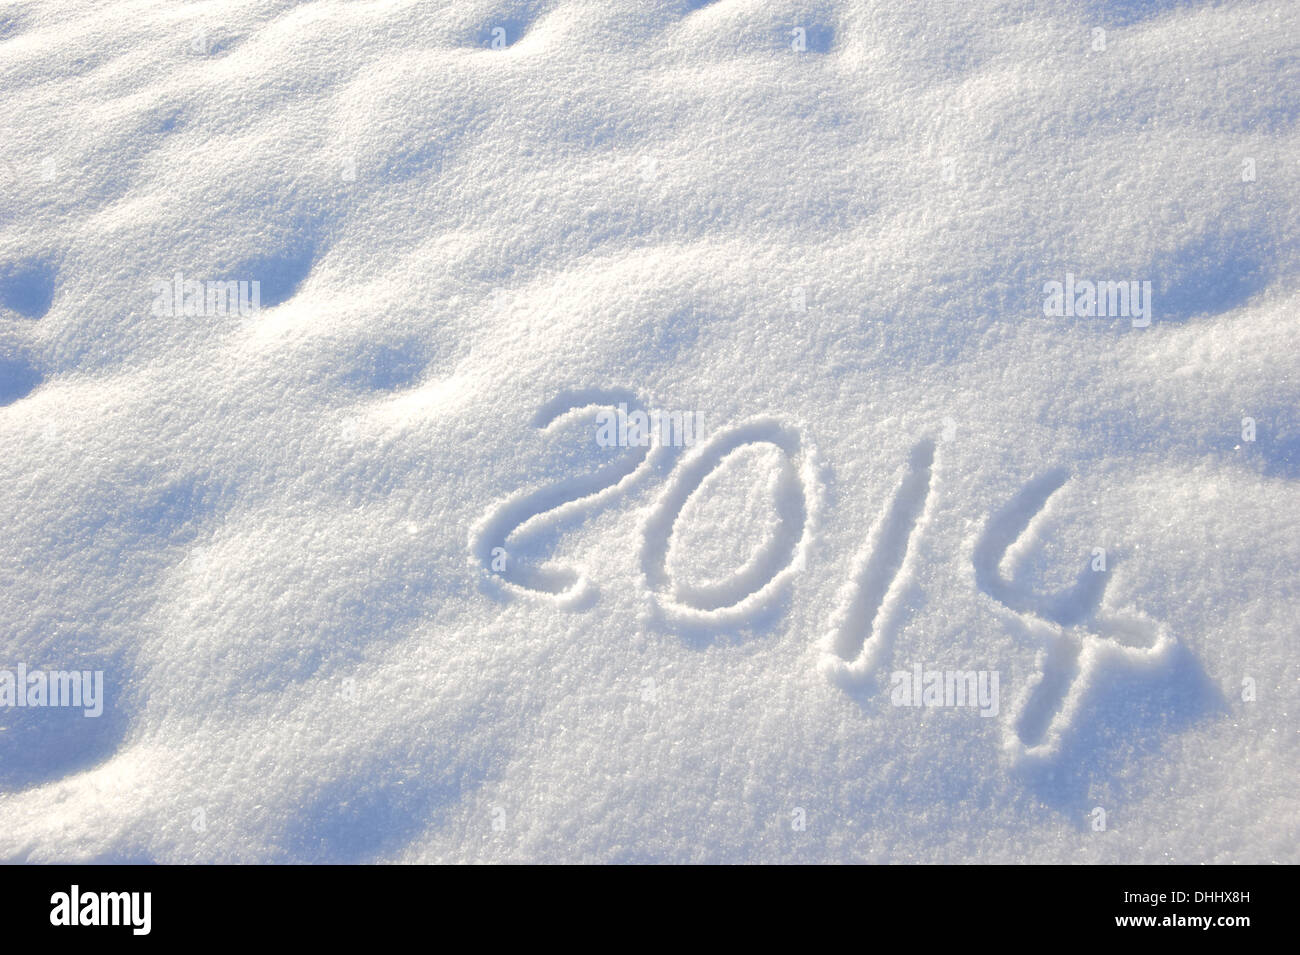 new year 2014 written in snow Stock Photo